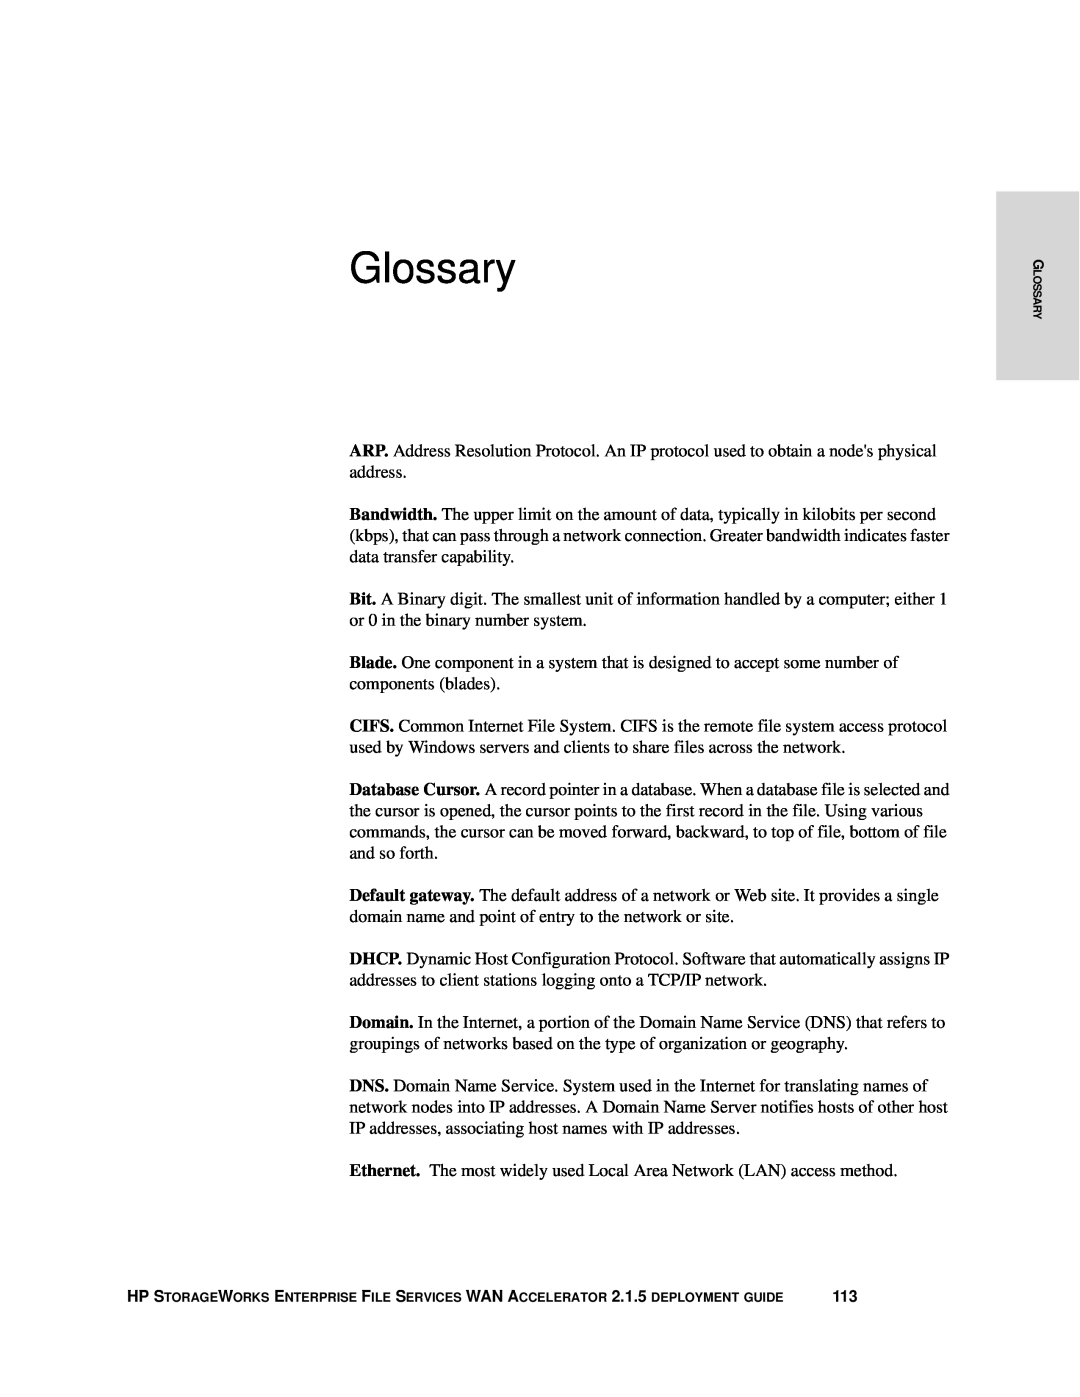 HP Enterprise File Services WAN Accelerator manual Glossary 